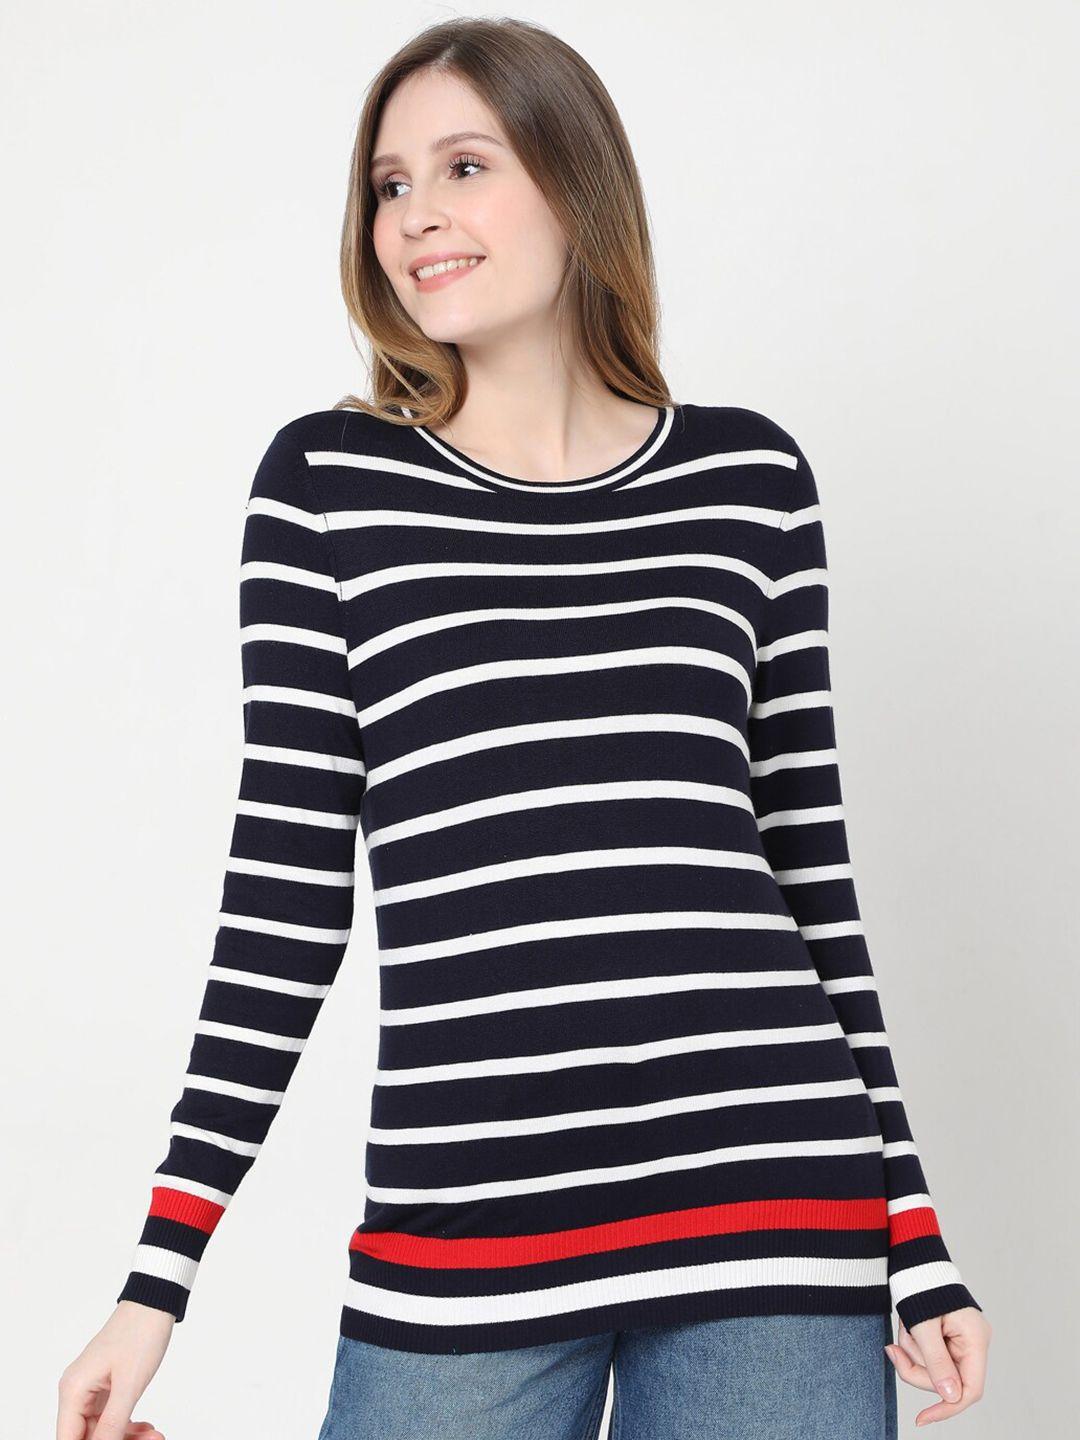 vero moda women navy blue & white striped pullover sweater